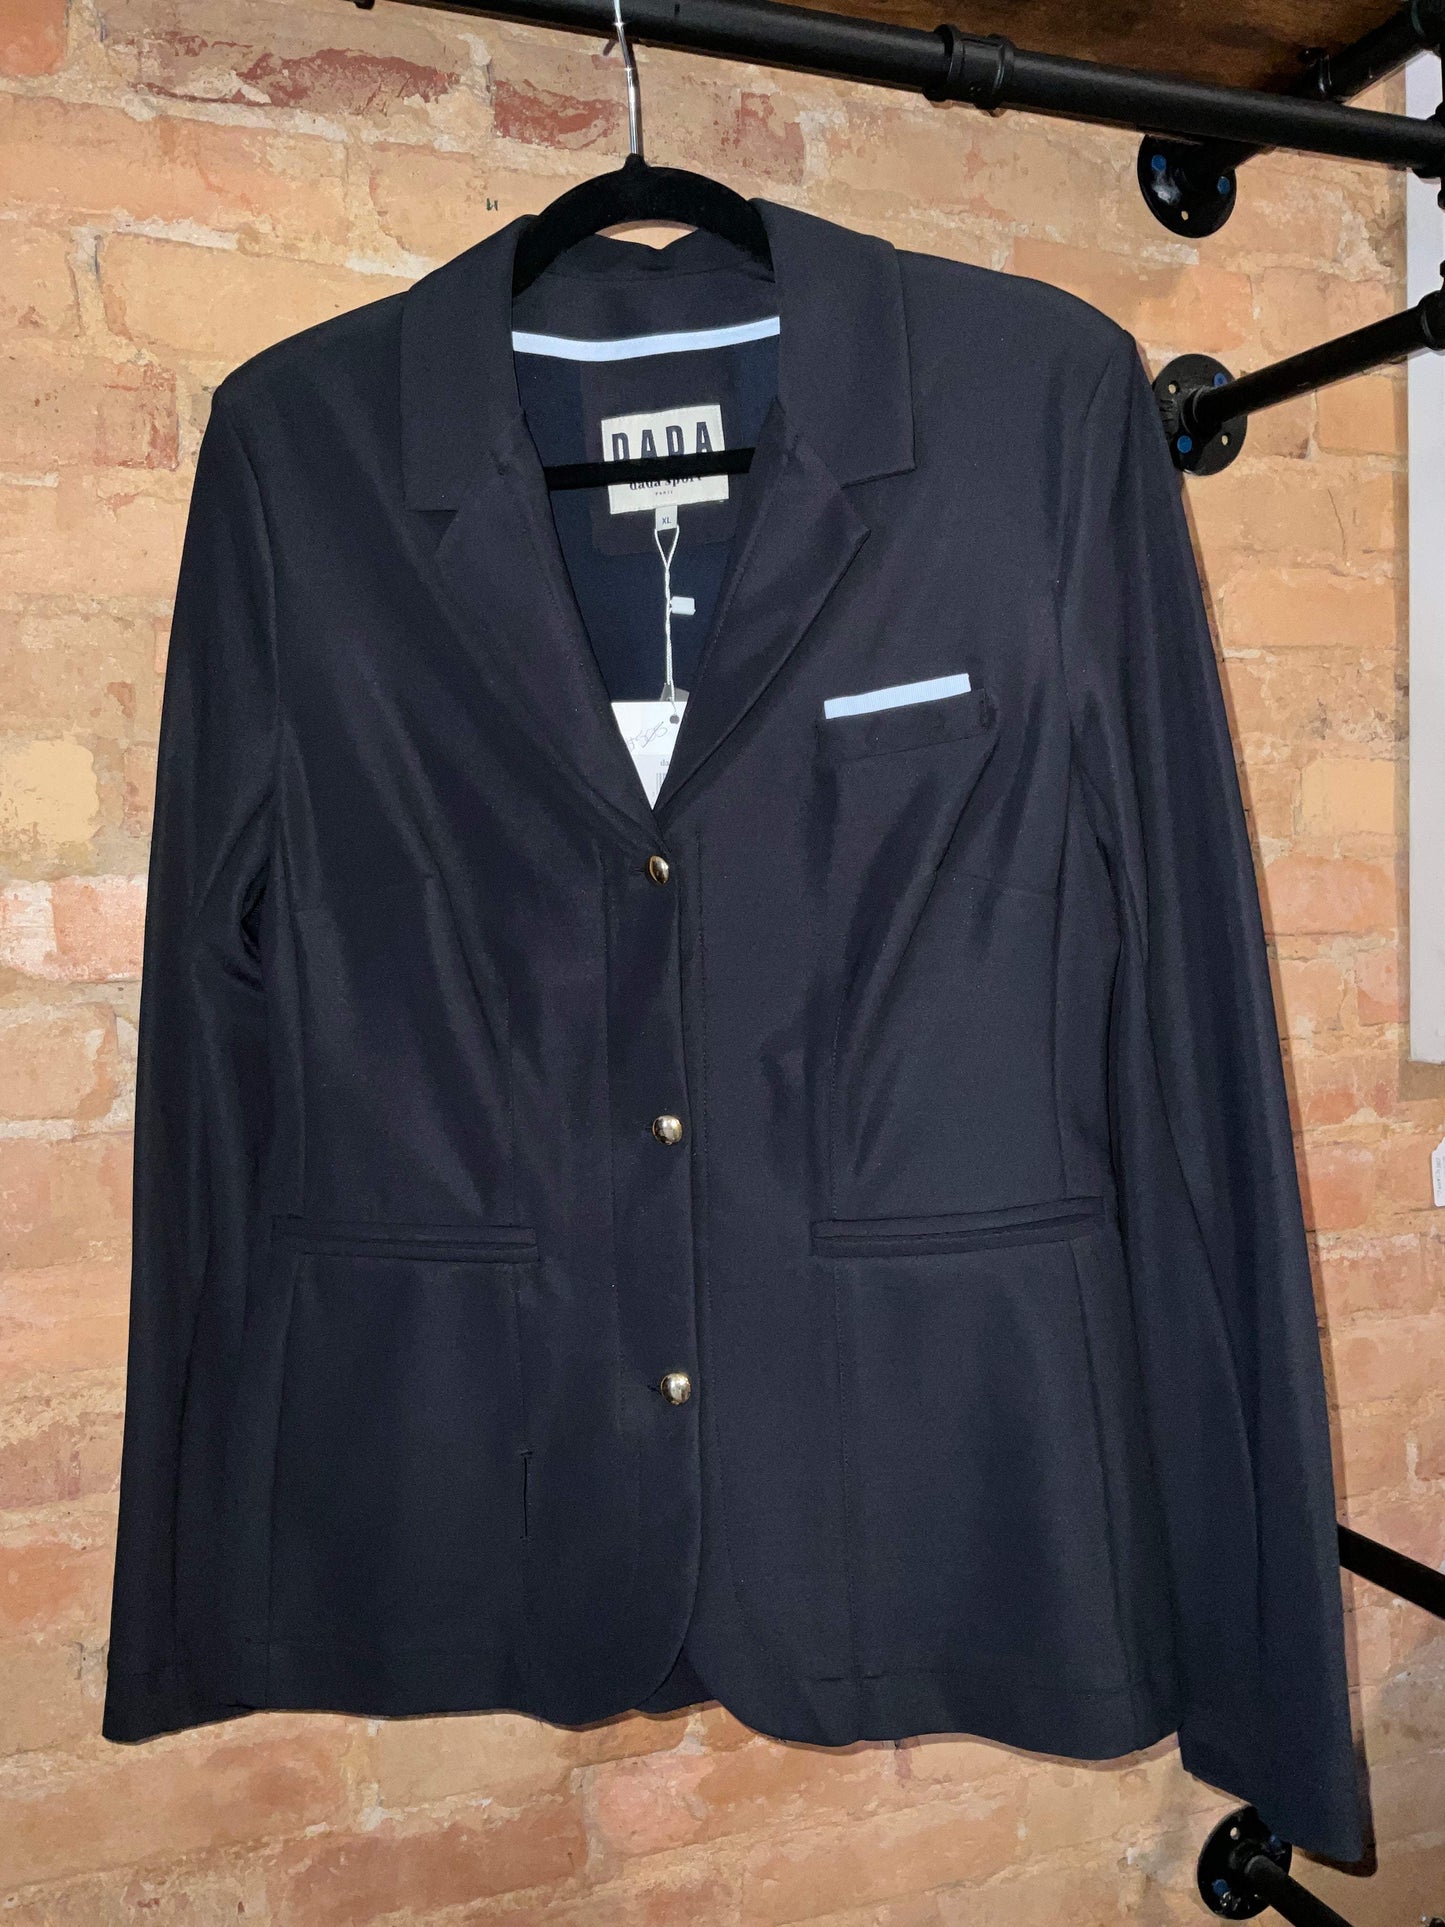 Dada Sport Alme Air Vest Compatible Show Coat Size XL